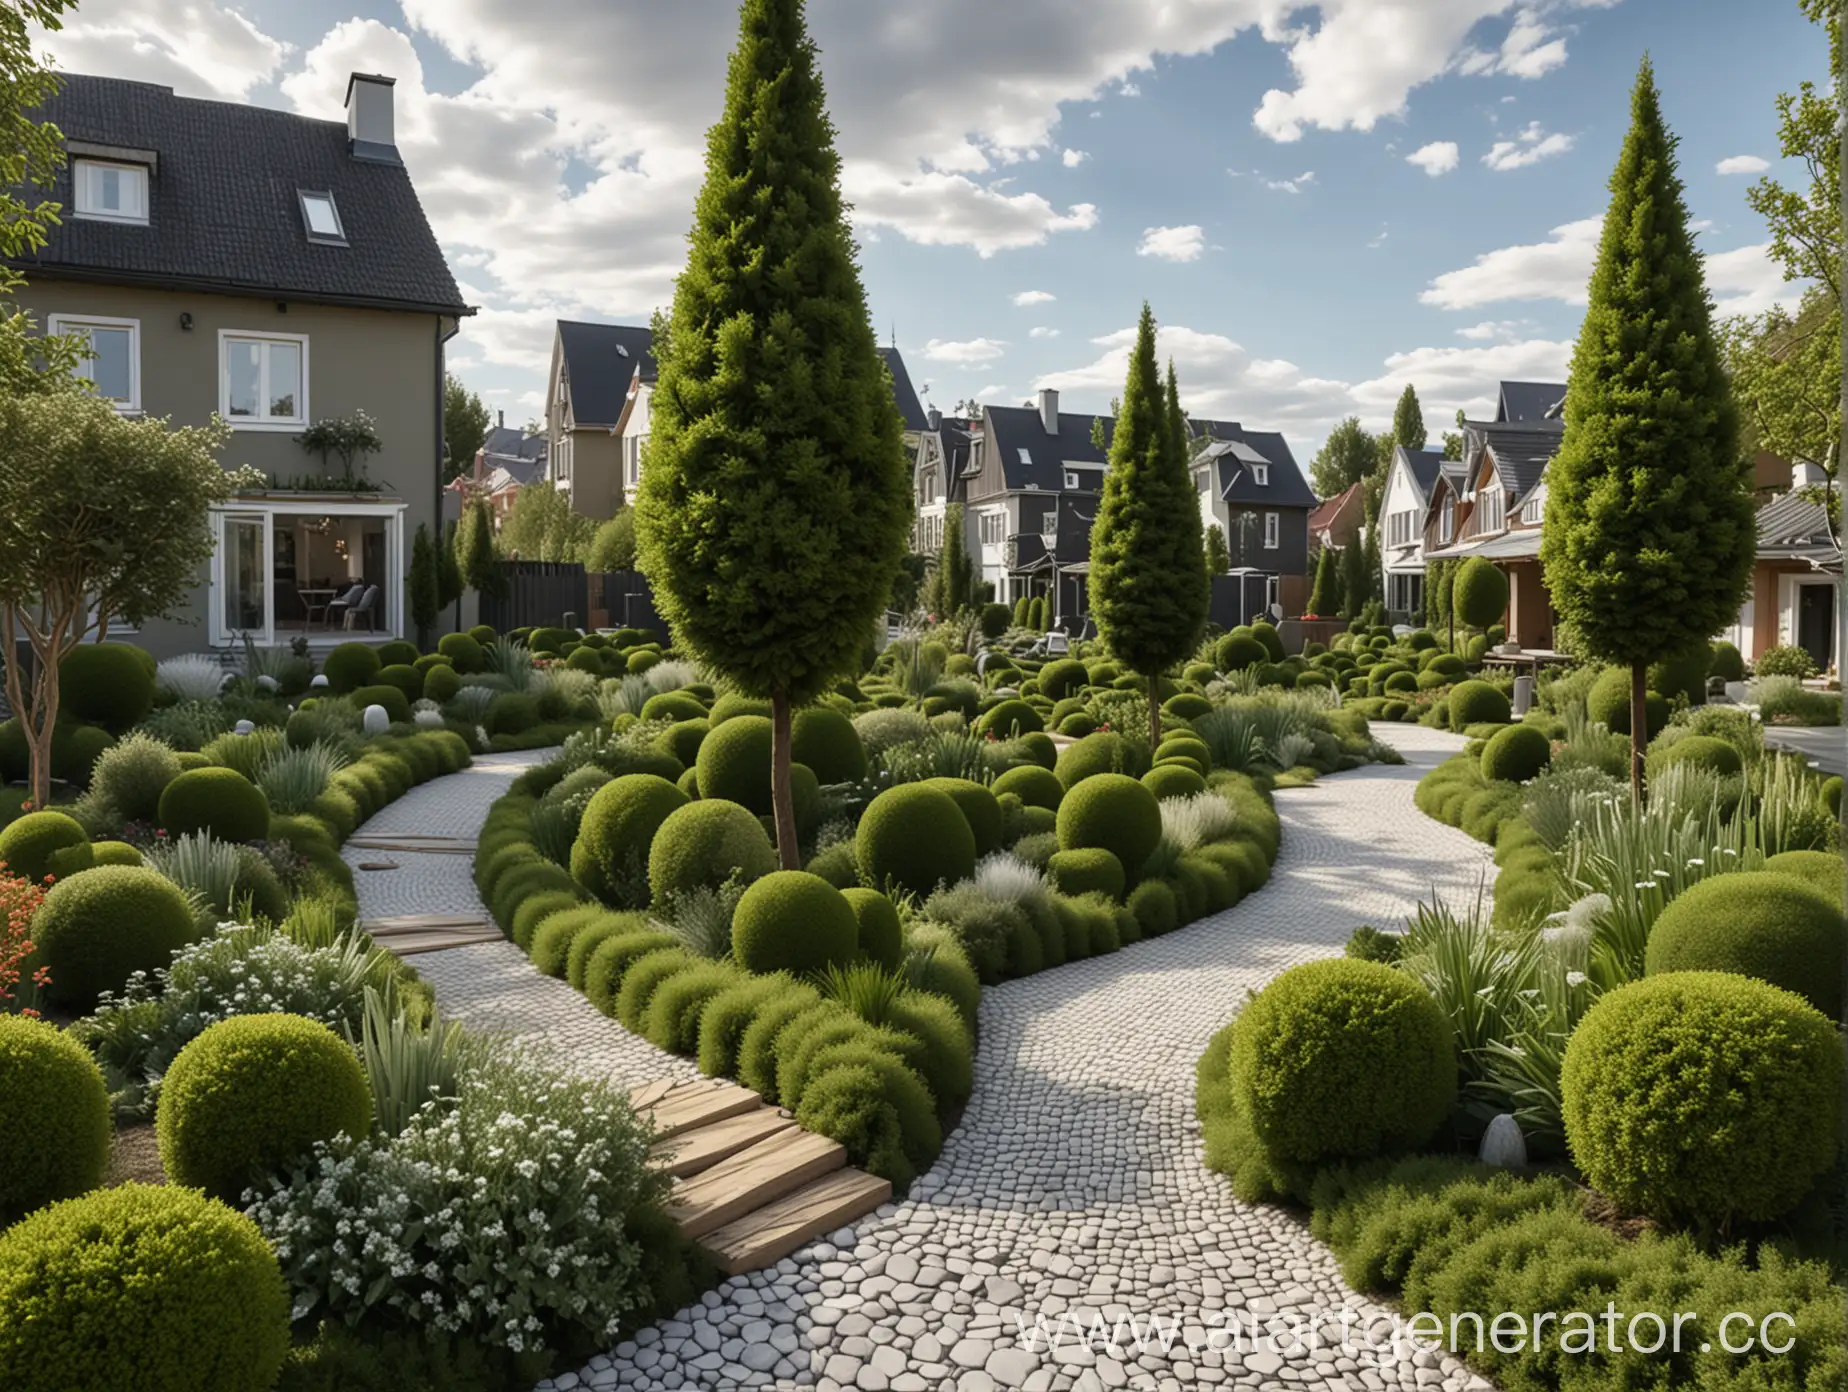 Futuristic-Scandinavian-Geoplastic-Garden-Urbaninspired-Vertical-Landscaping